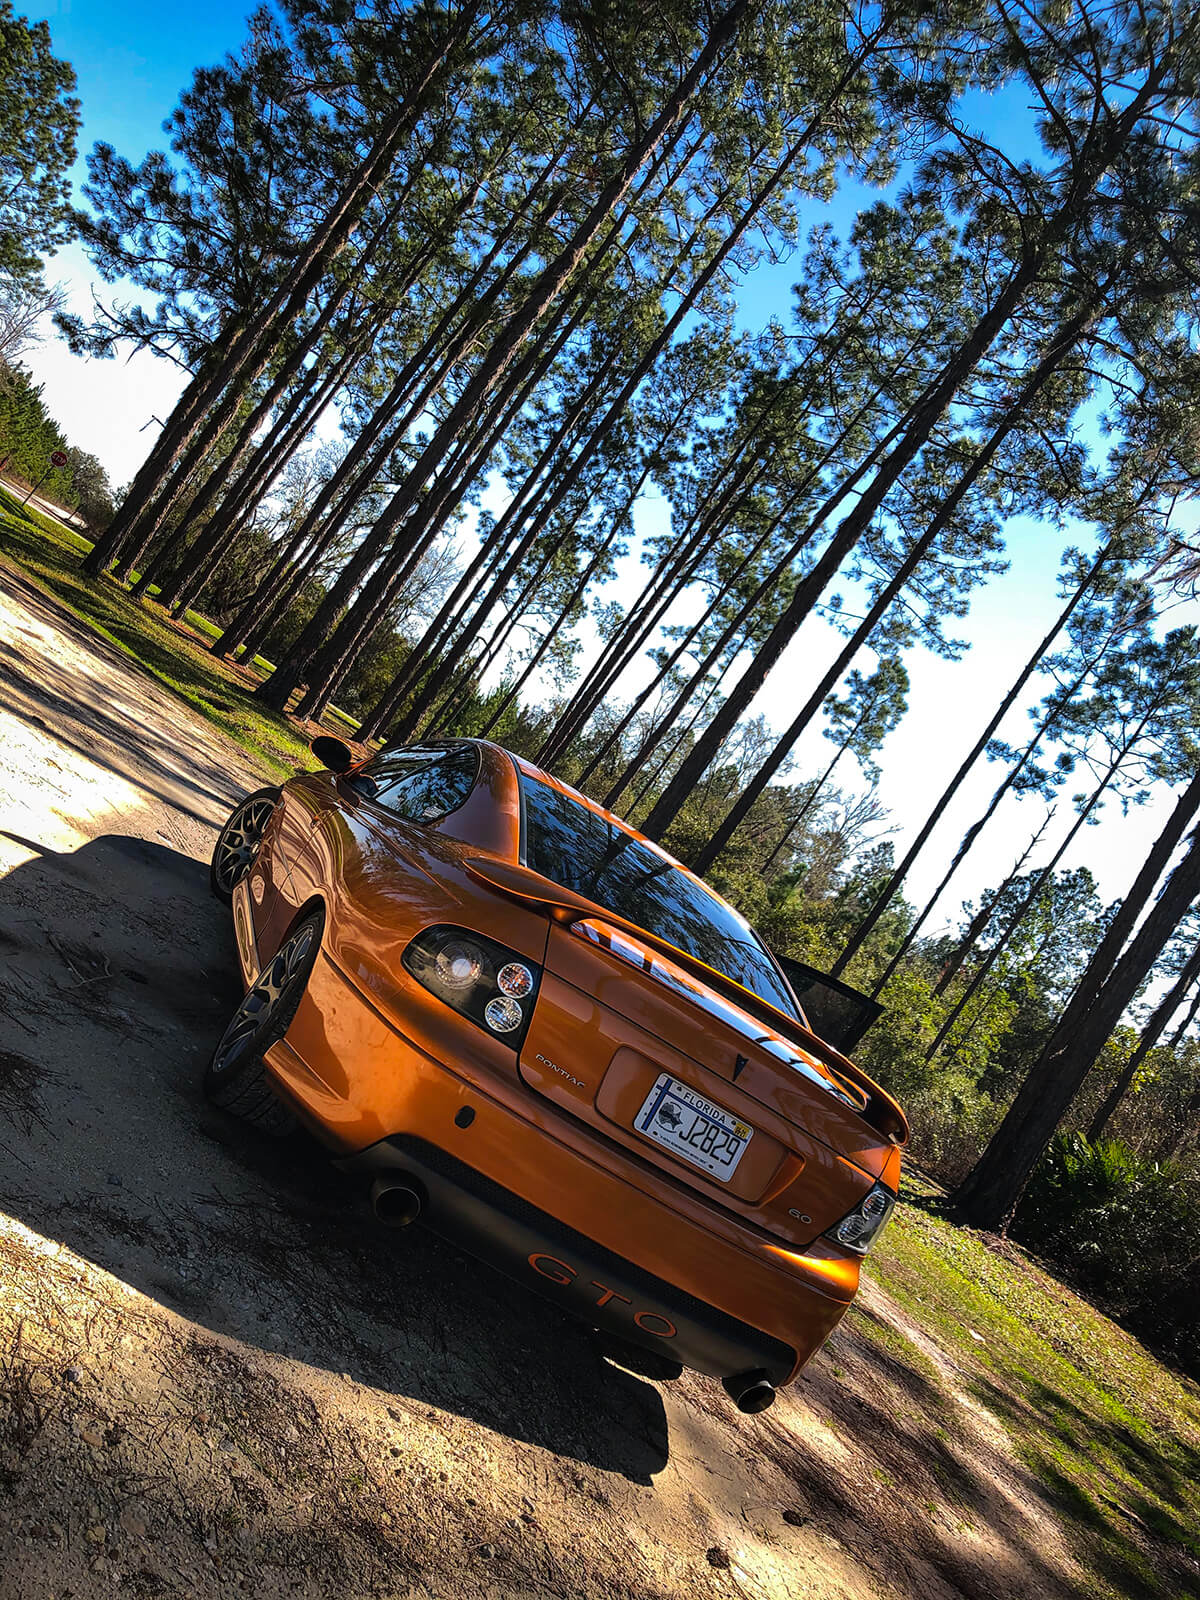 Factory Brazen Orange Metallic paint: 1 of 484 Orange GTO’s with Manual transmission option